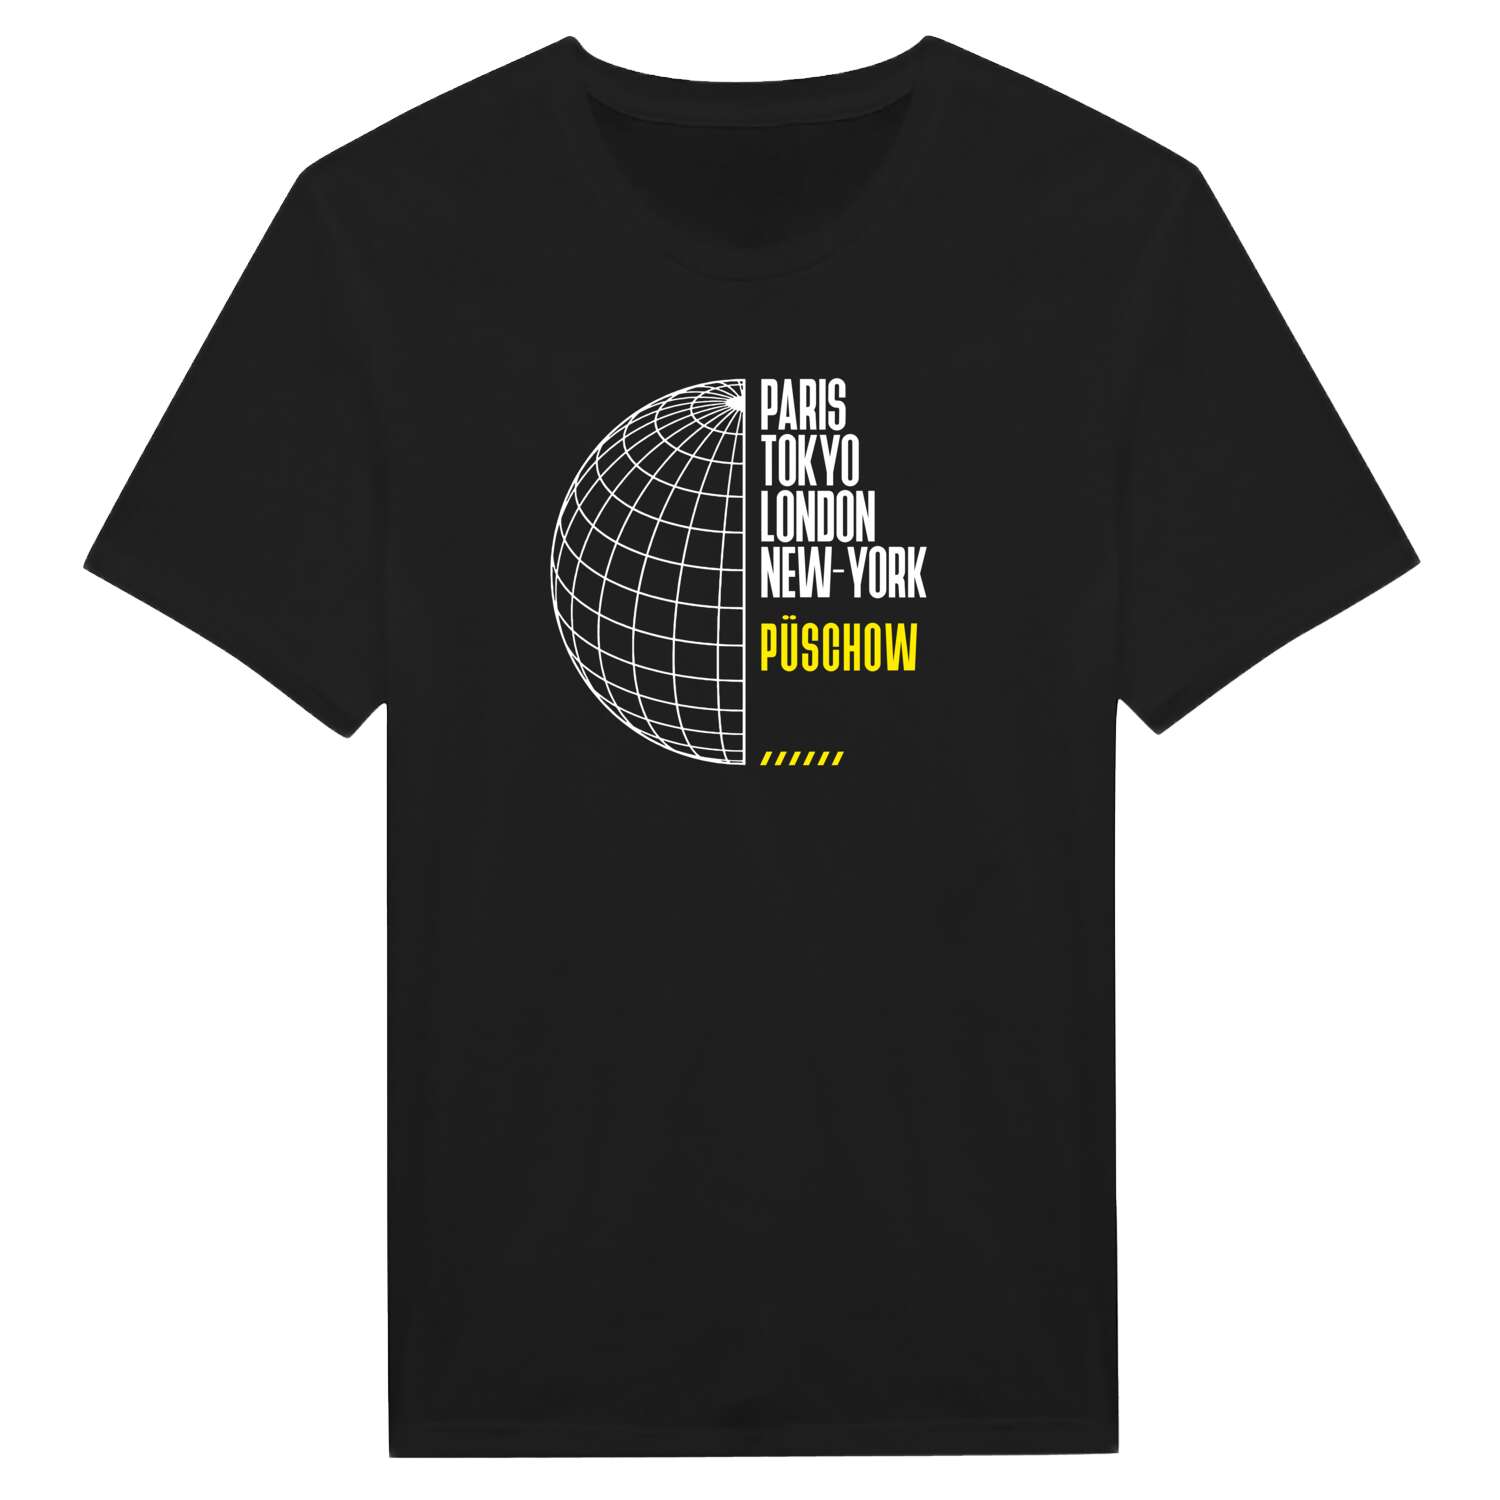 Püschow T-Shirt »Paris Tokyo London«